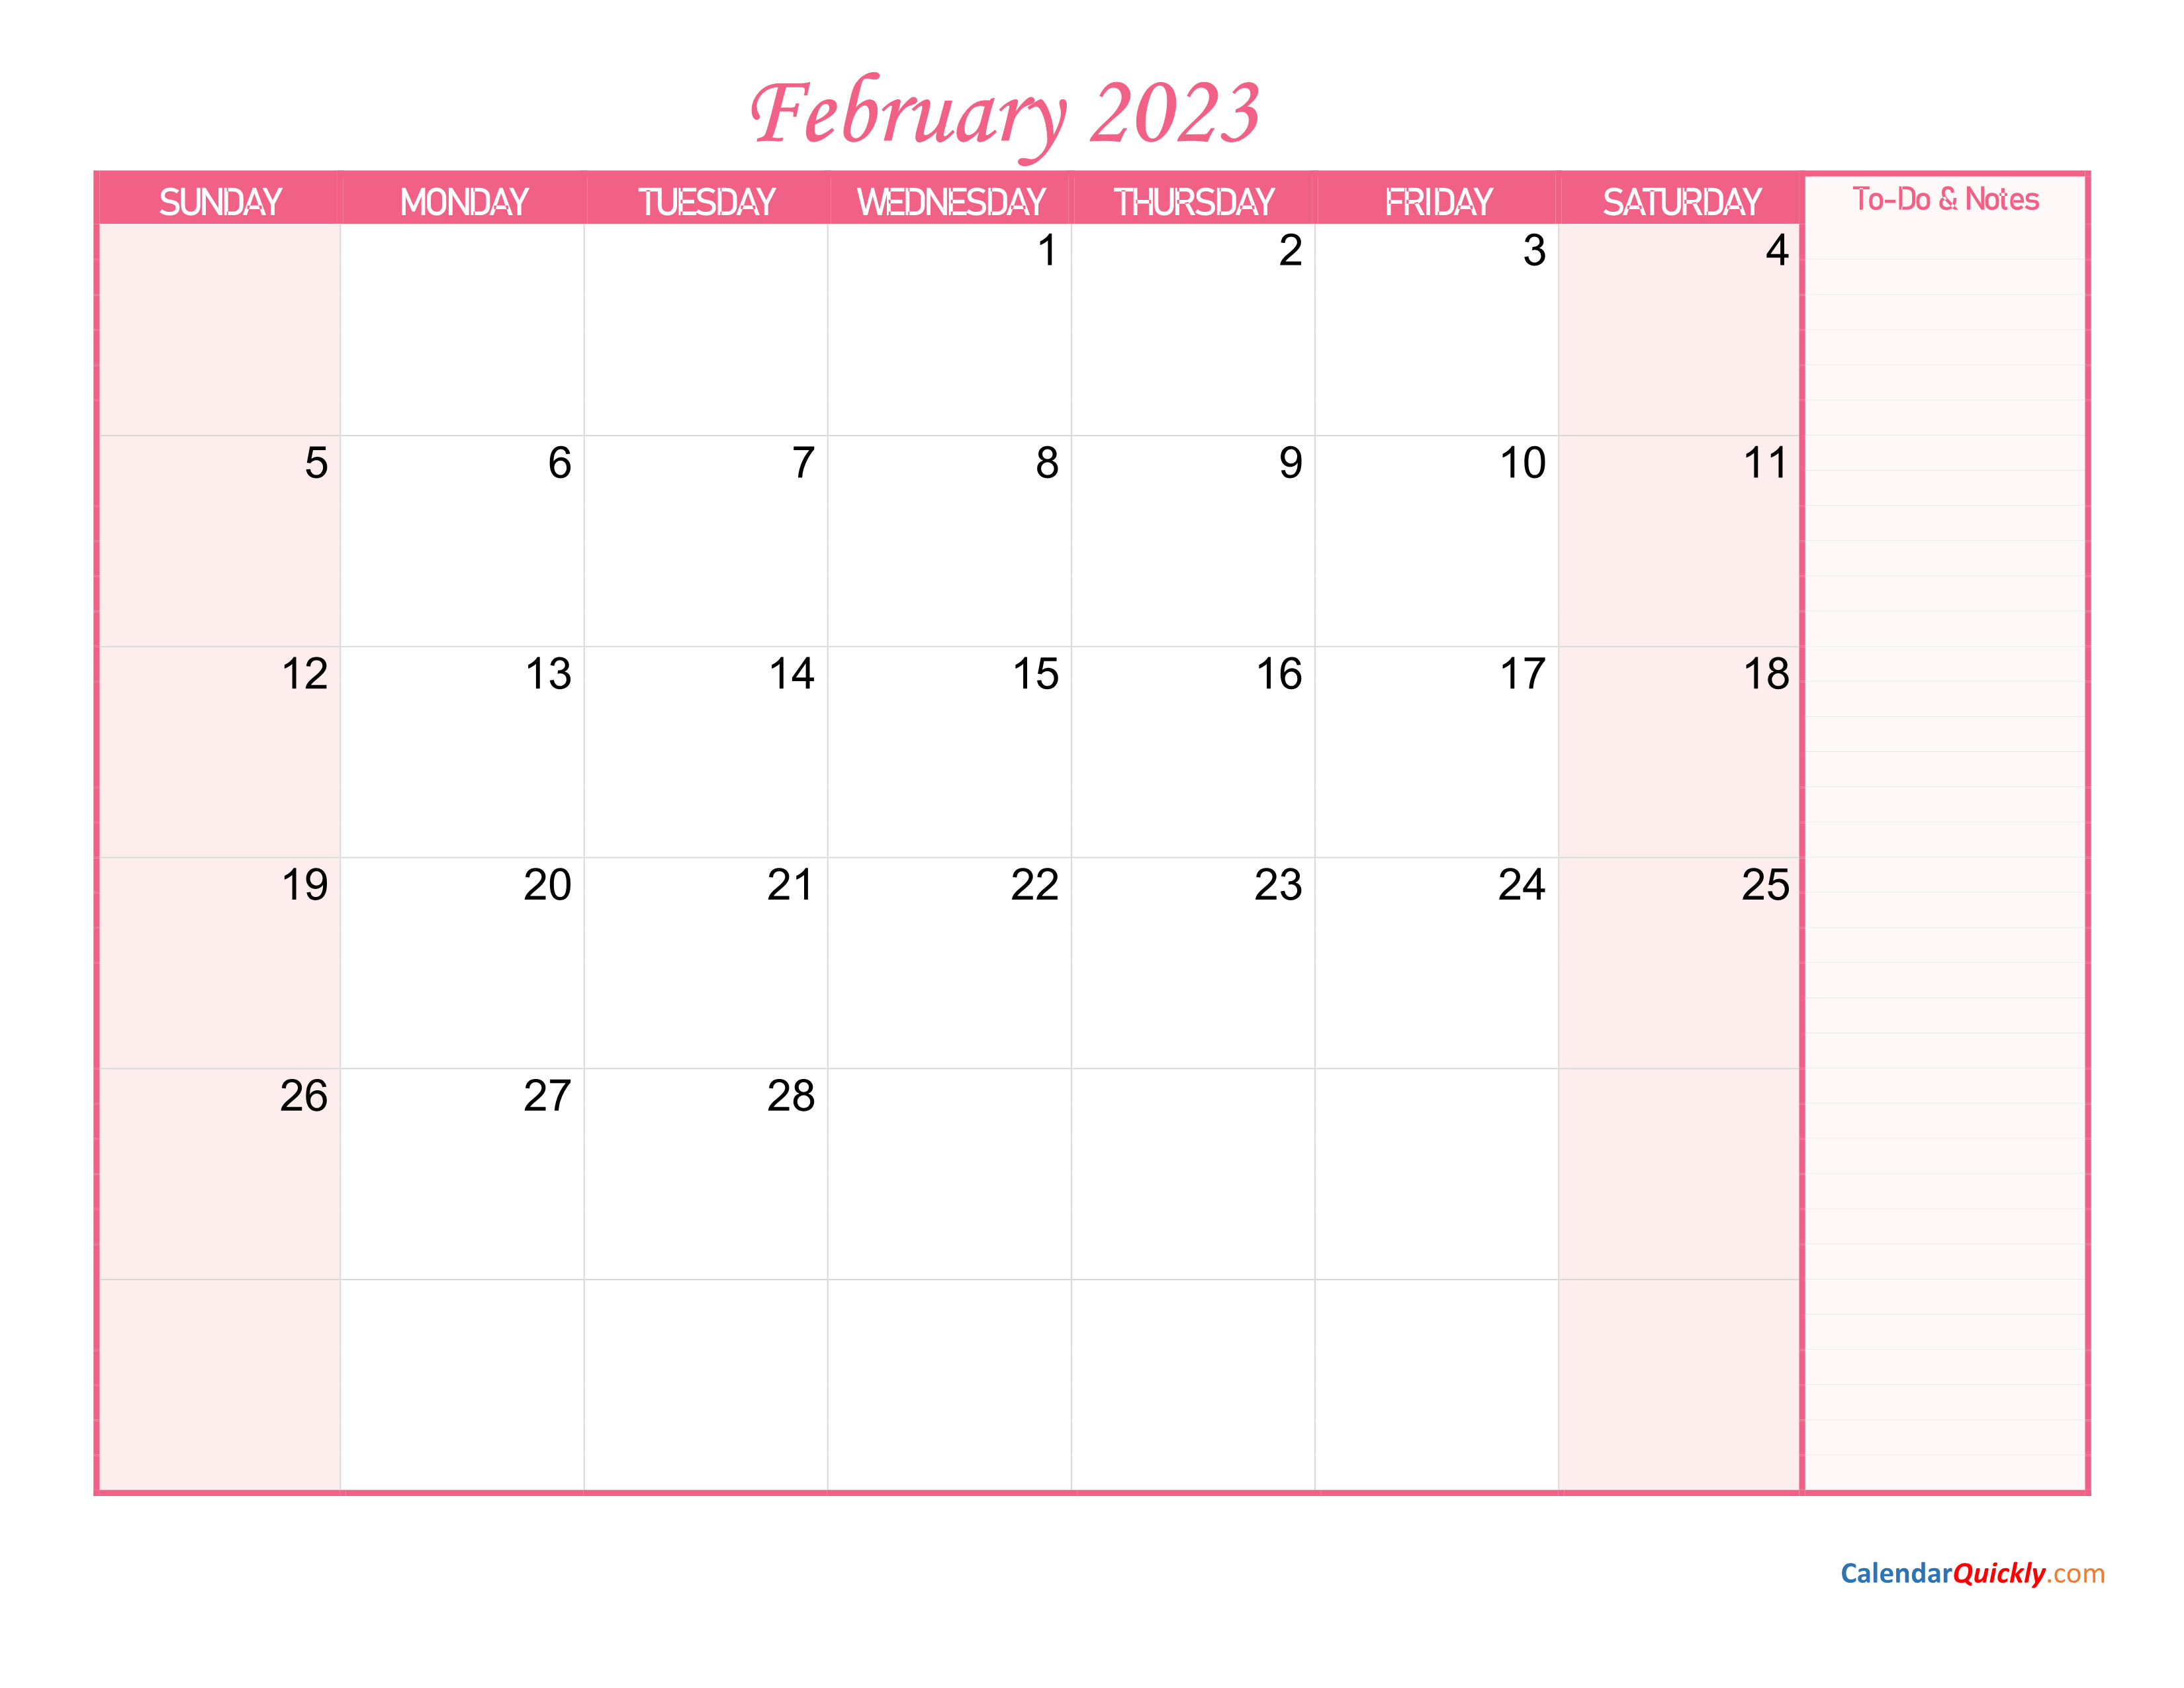 February Calendar 2023 with Notes | Calendar Quickly